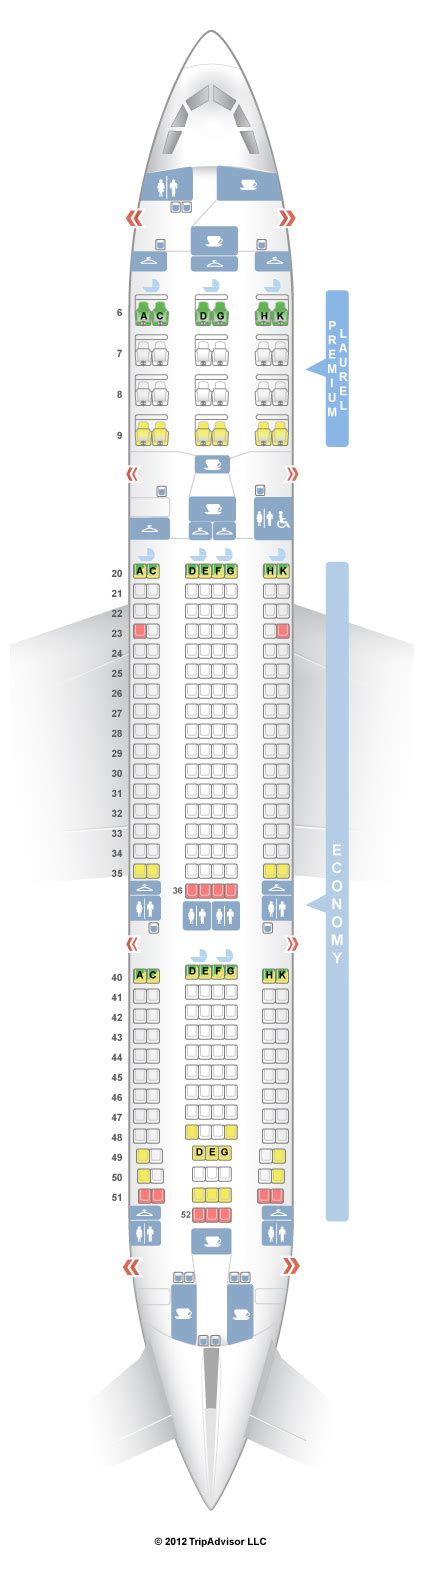 Air Transat Airbus A330 200 Seating Chart